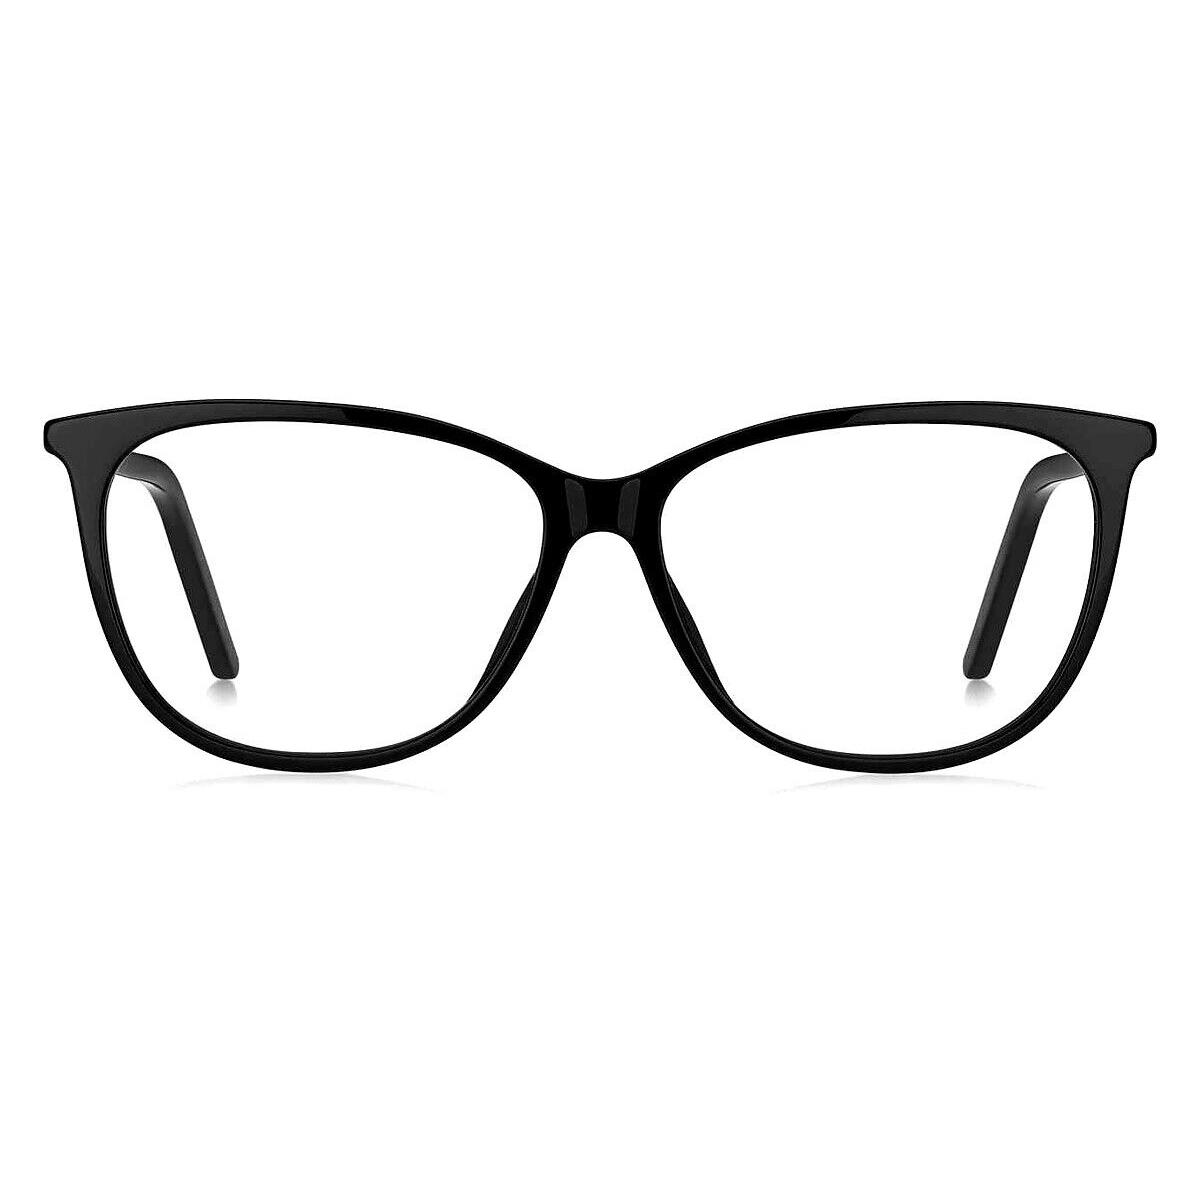 Marc Jacobs Mjb Eyeglasses Women Black 55mm